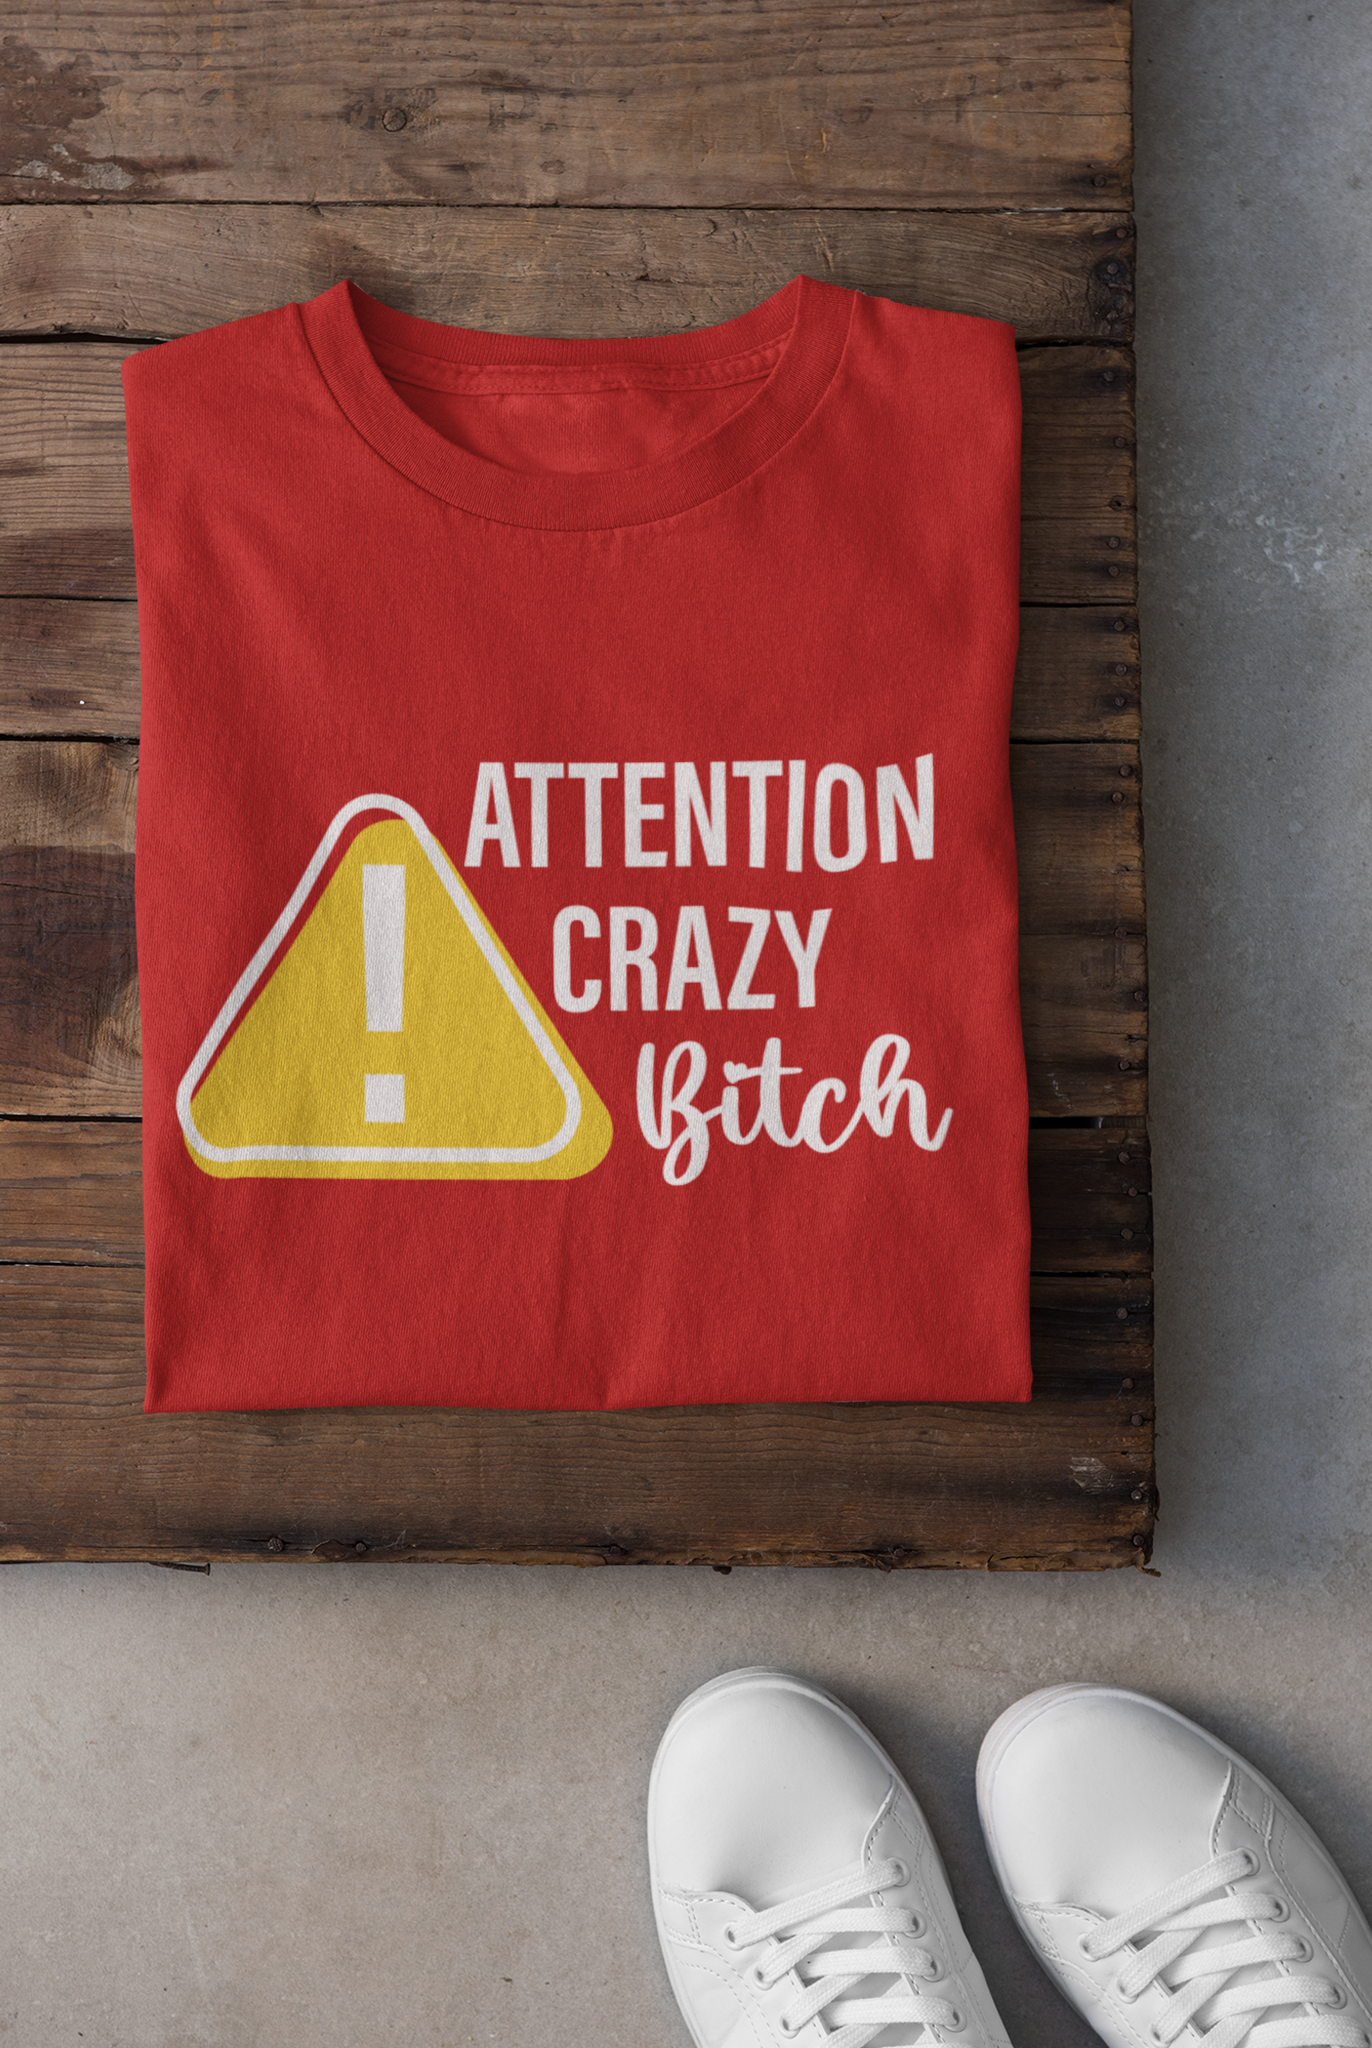 T-shirt - Attention crazy bitch